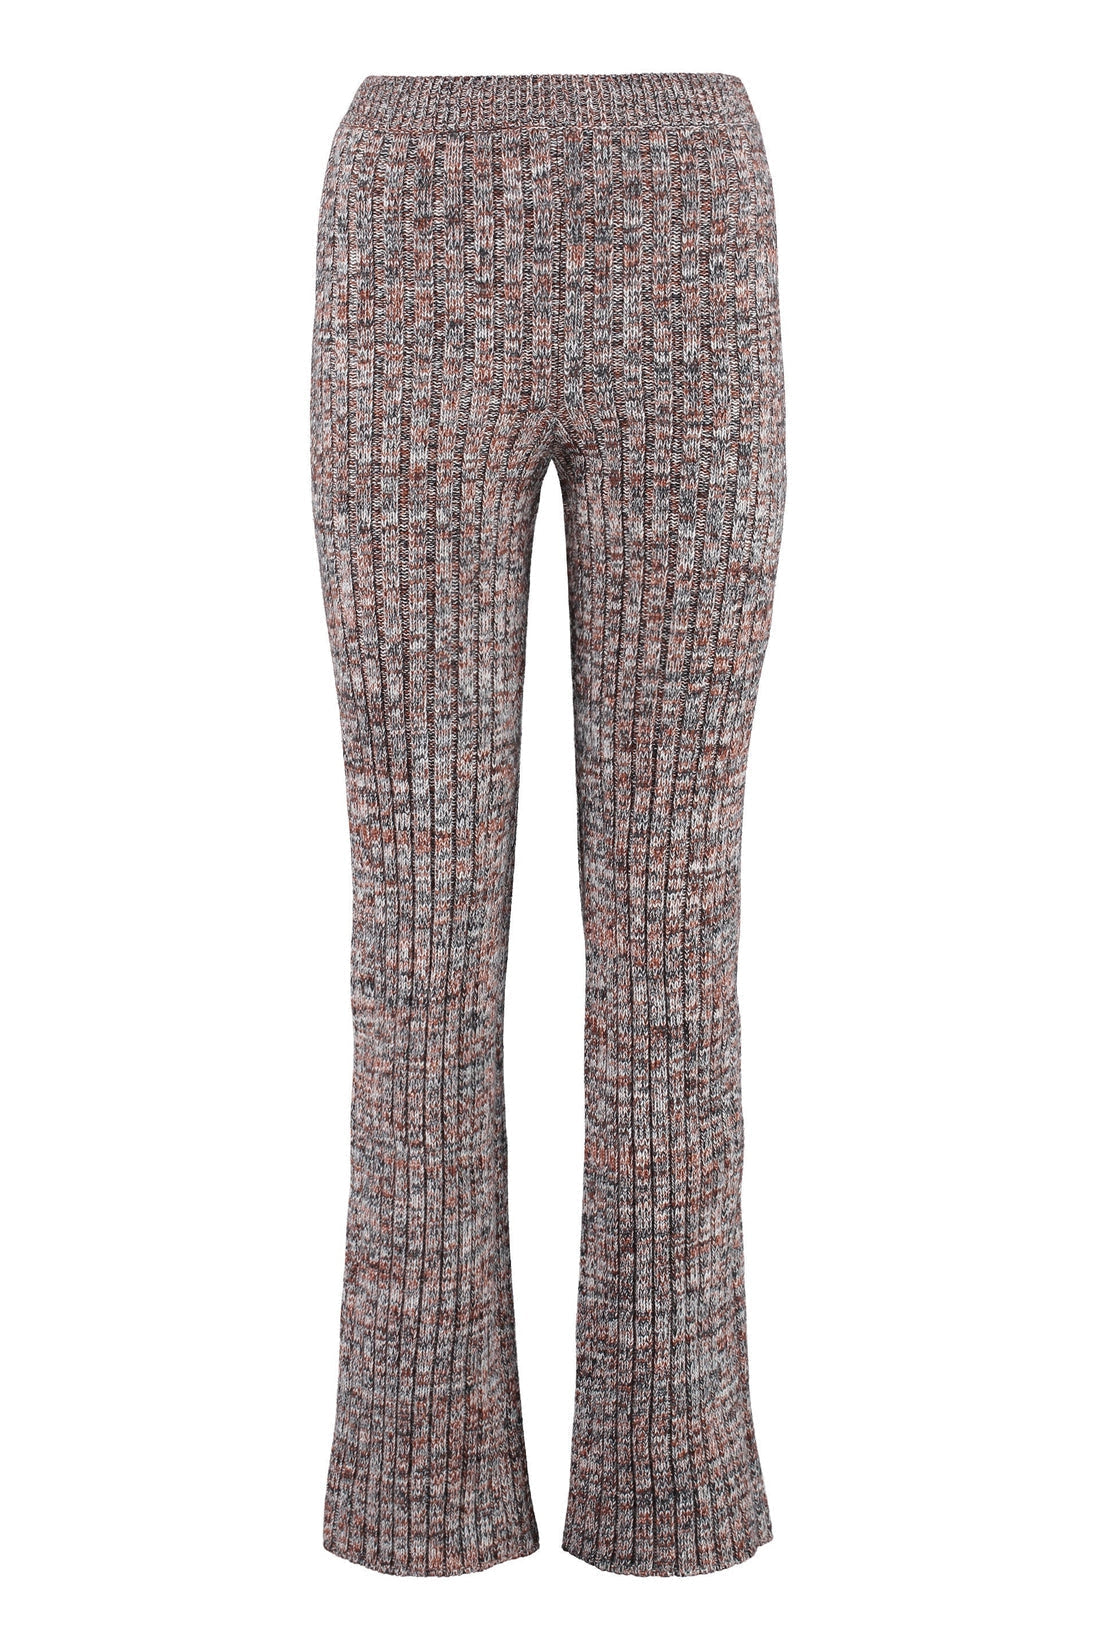 Chloé-OUTLET-SALE-Ribbed knit trousers-ARCHIVIST